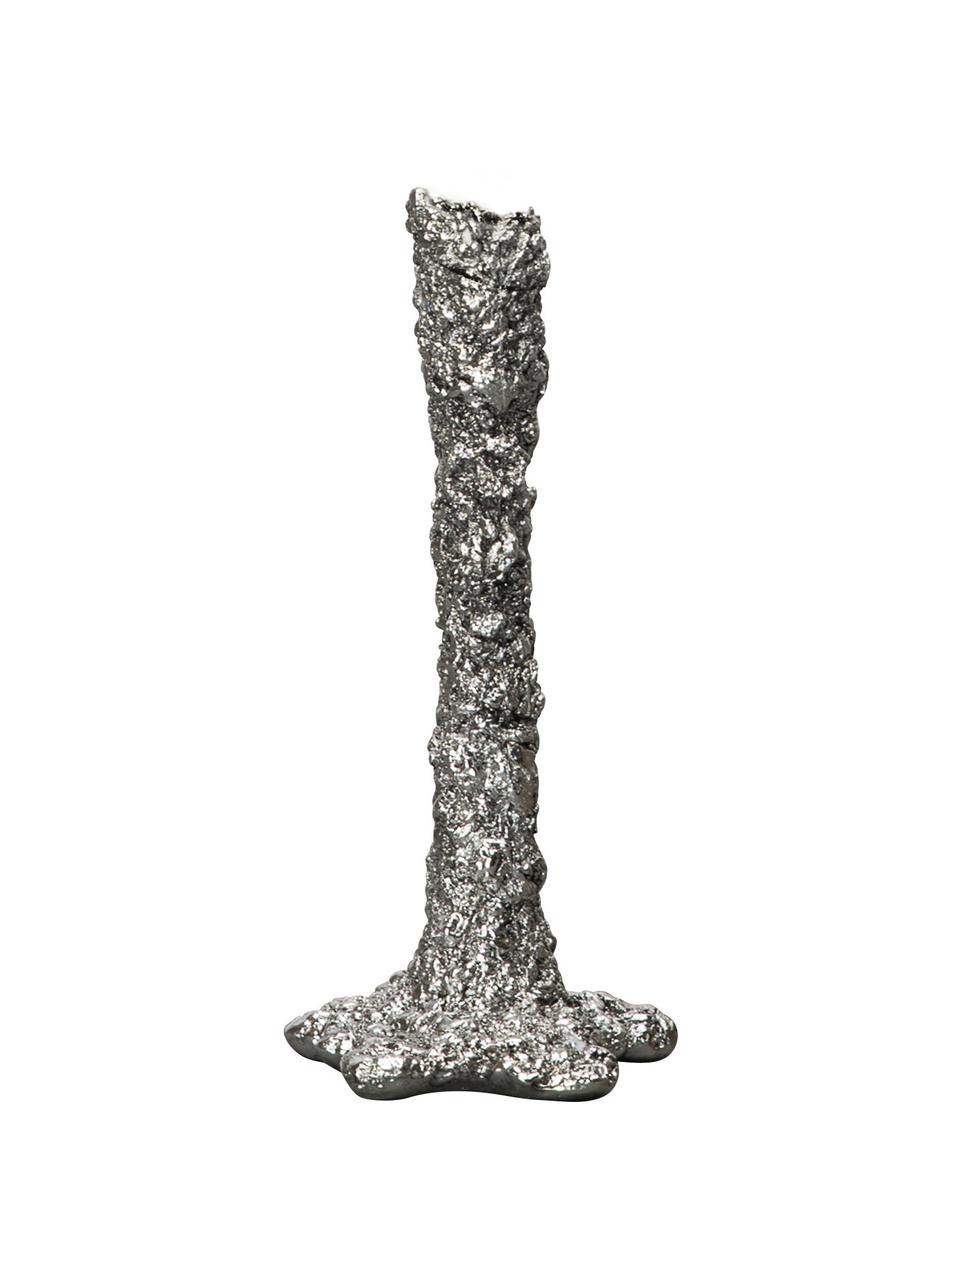 Kerzenhalter Space in Silber, Kunststoff, Silberfarben, Ø 10 x H 18 cm